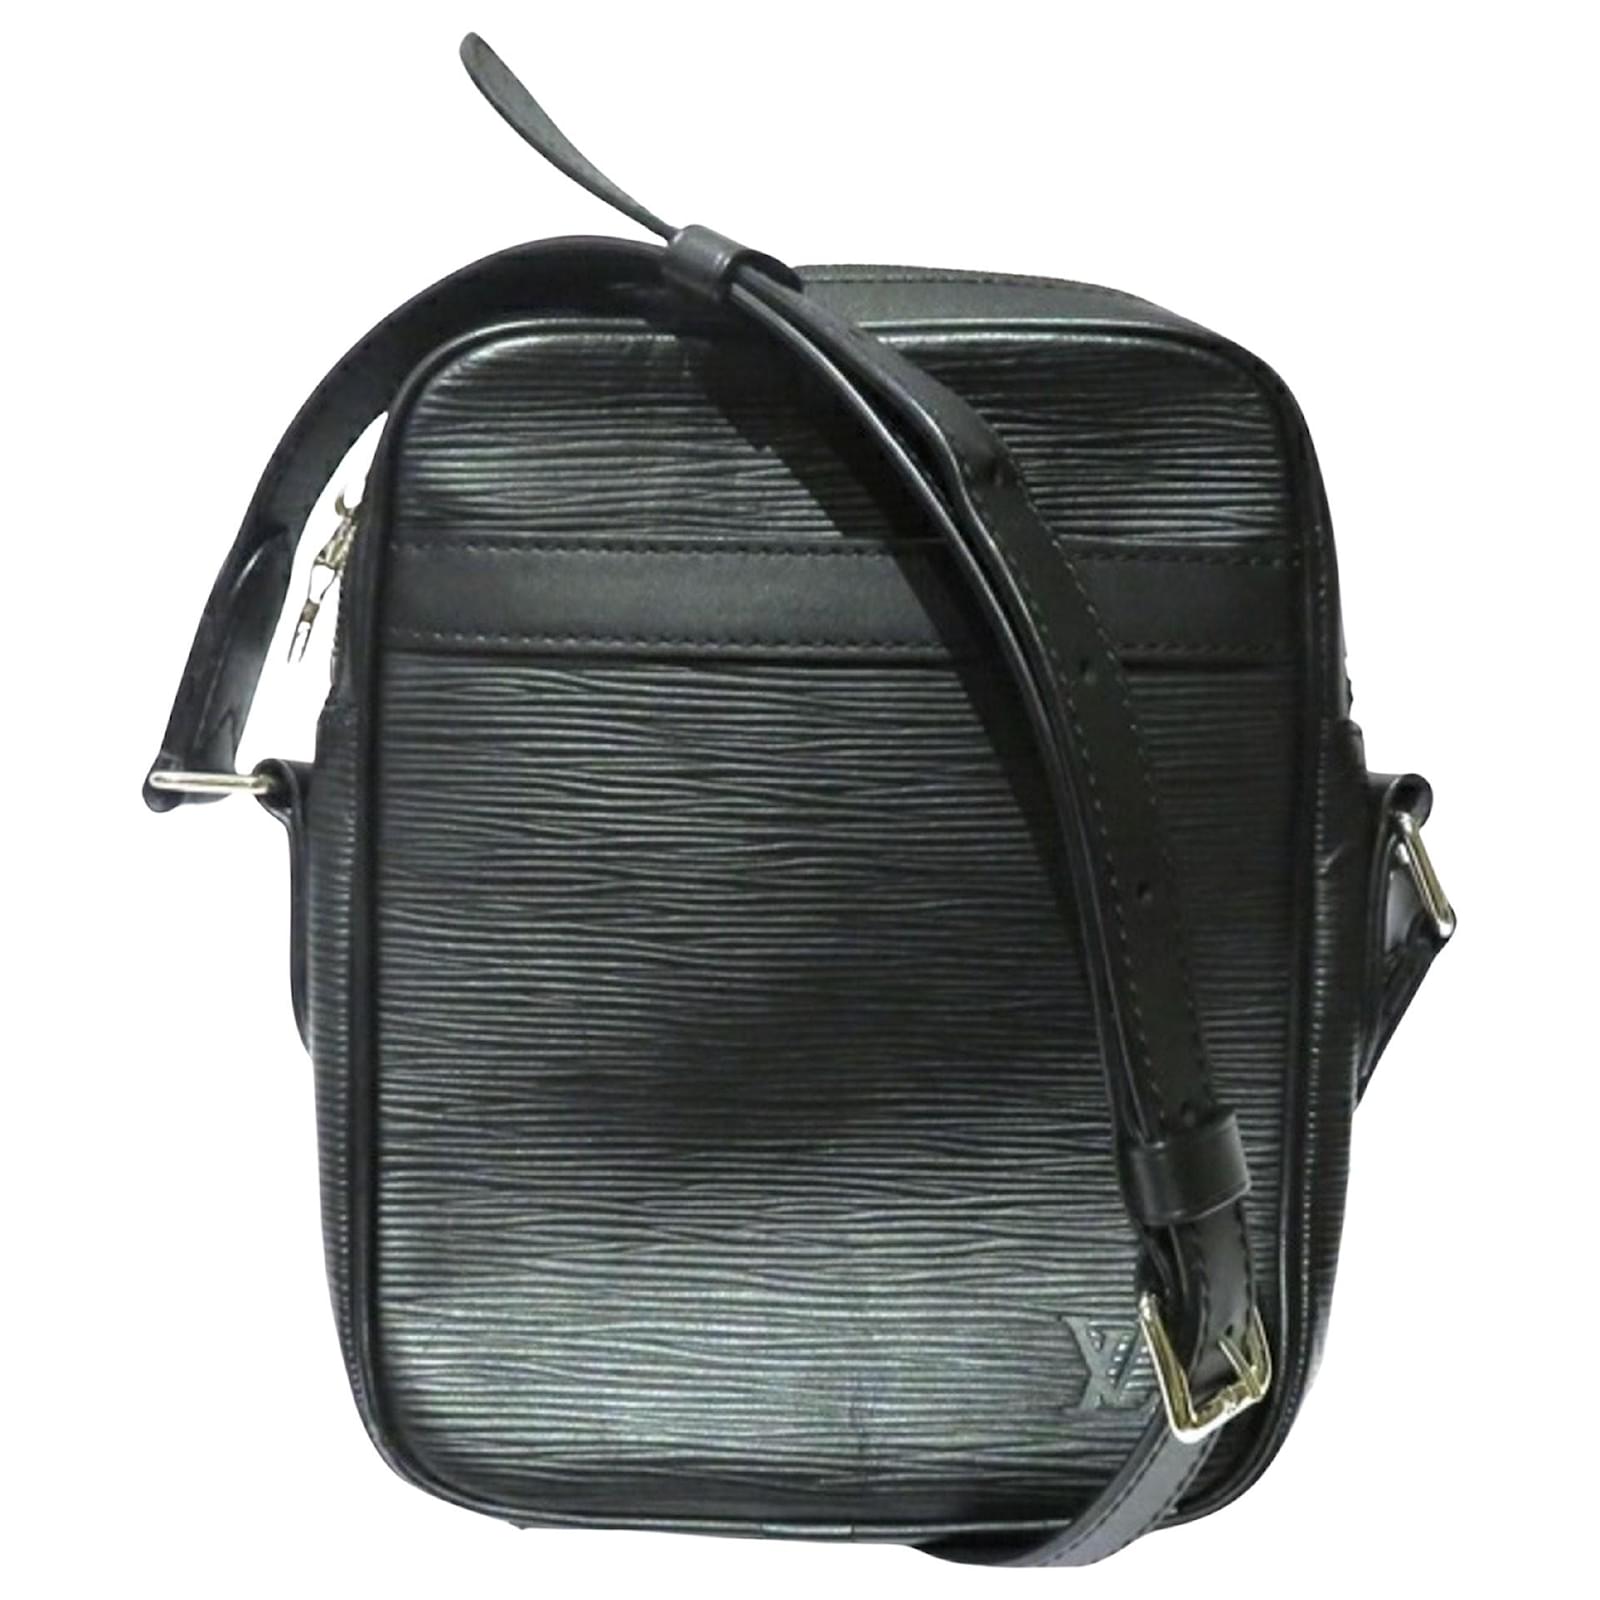 Epi Neo Noe in black. The perfect minimalist everyday bag!